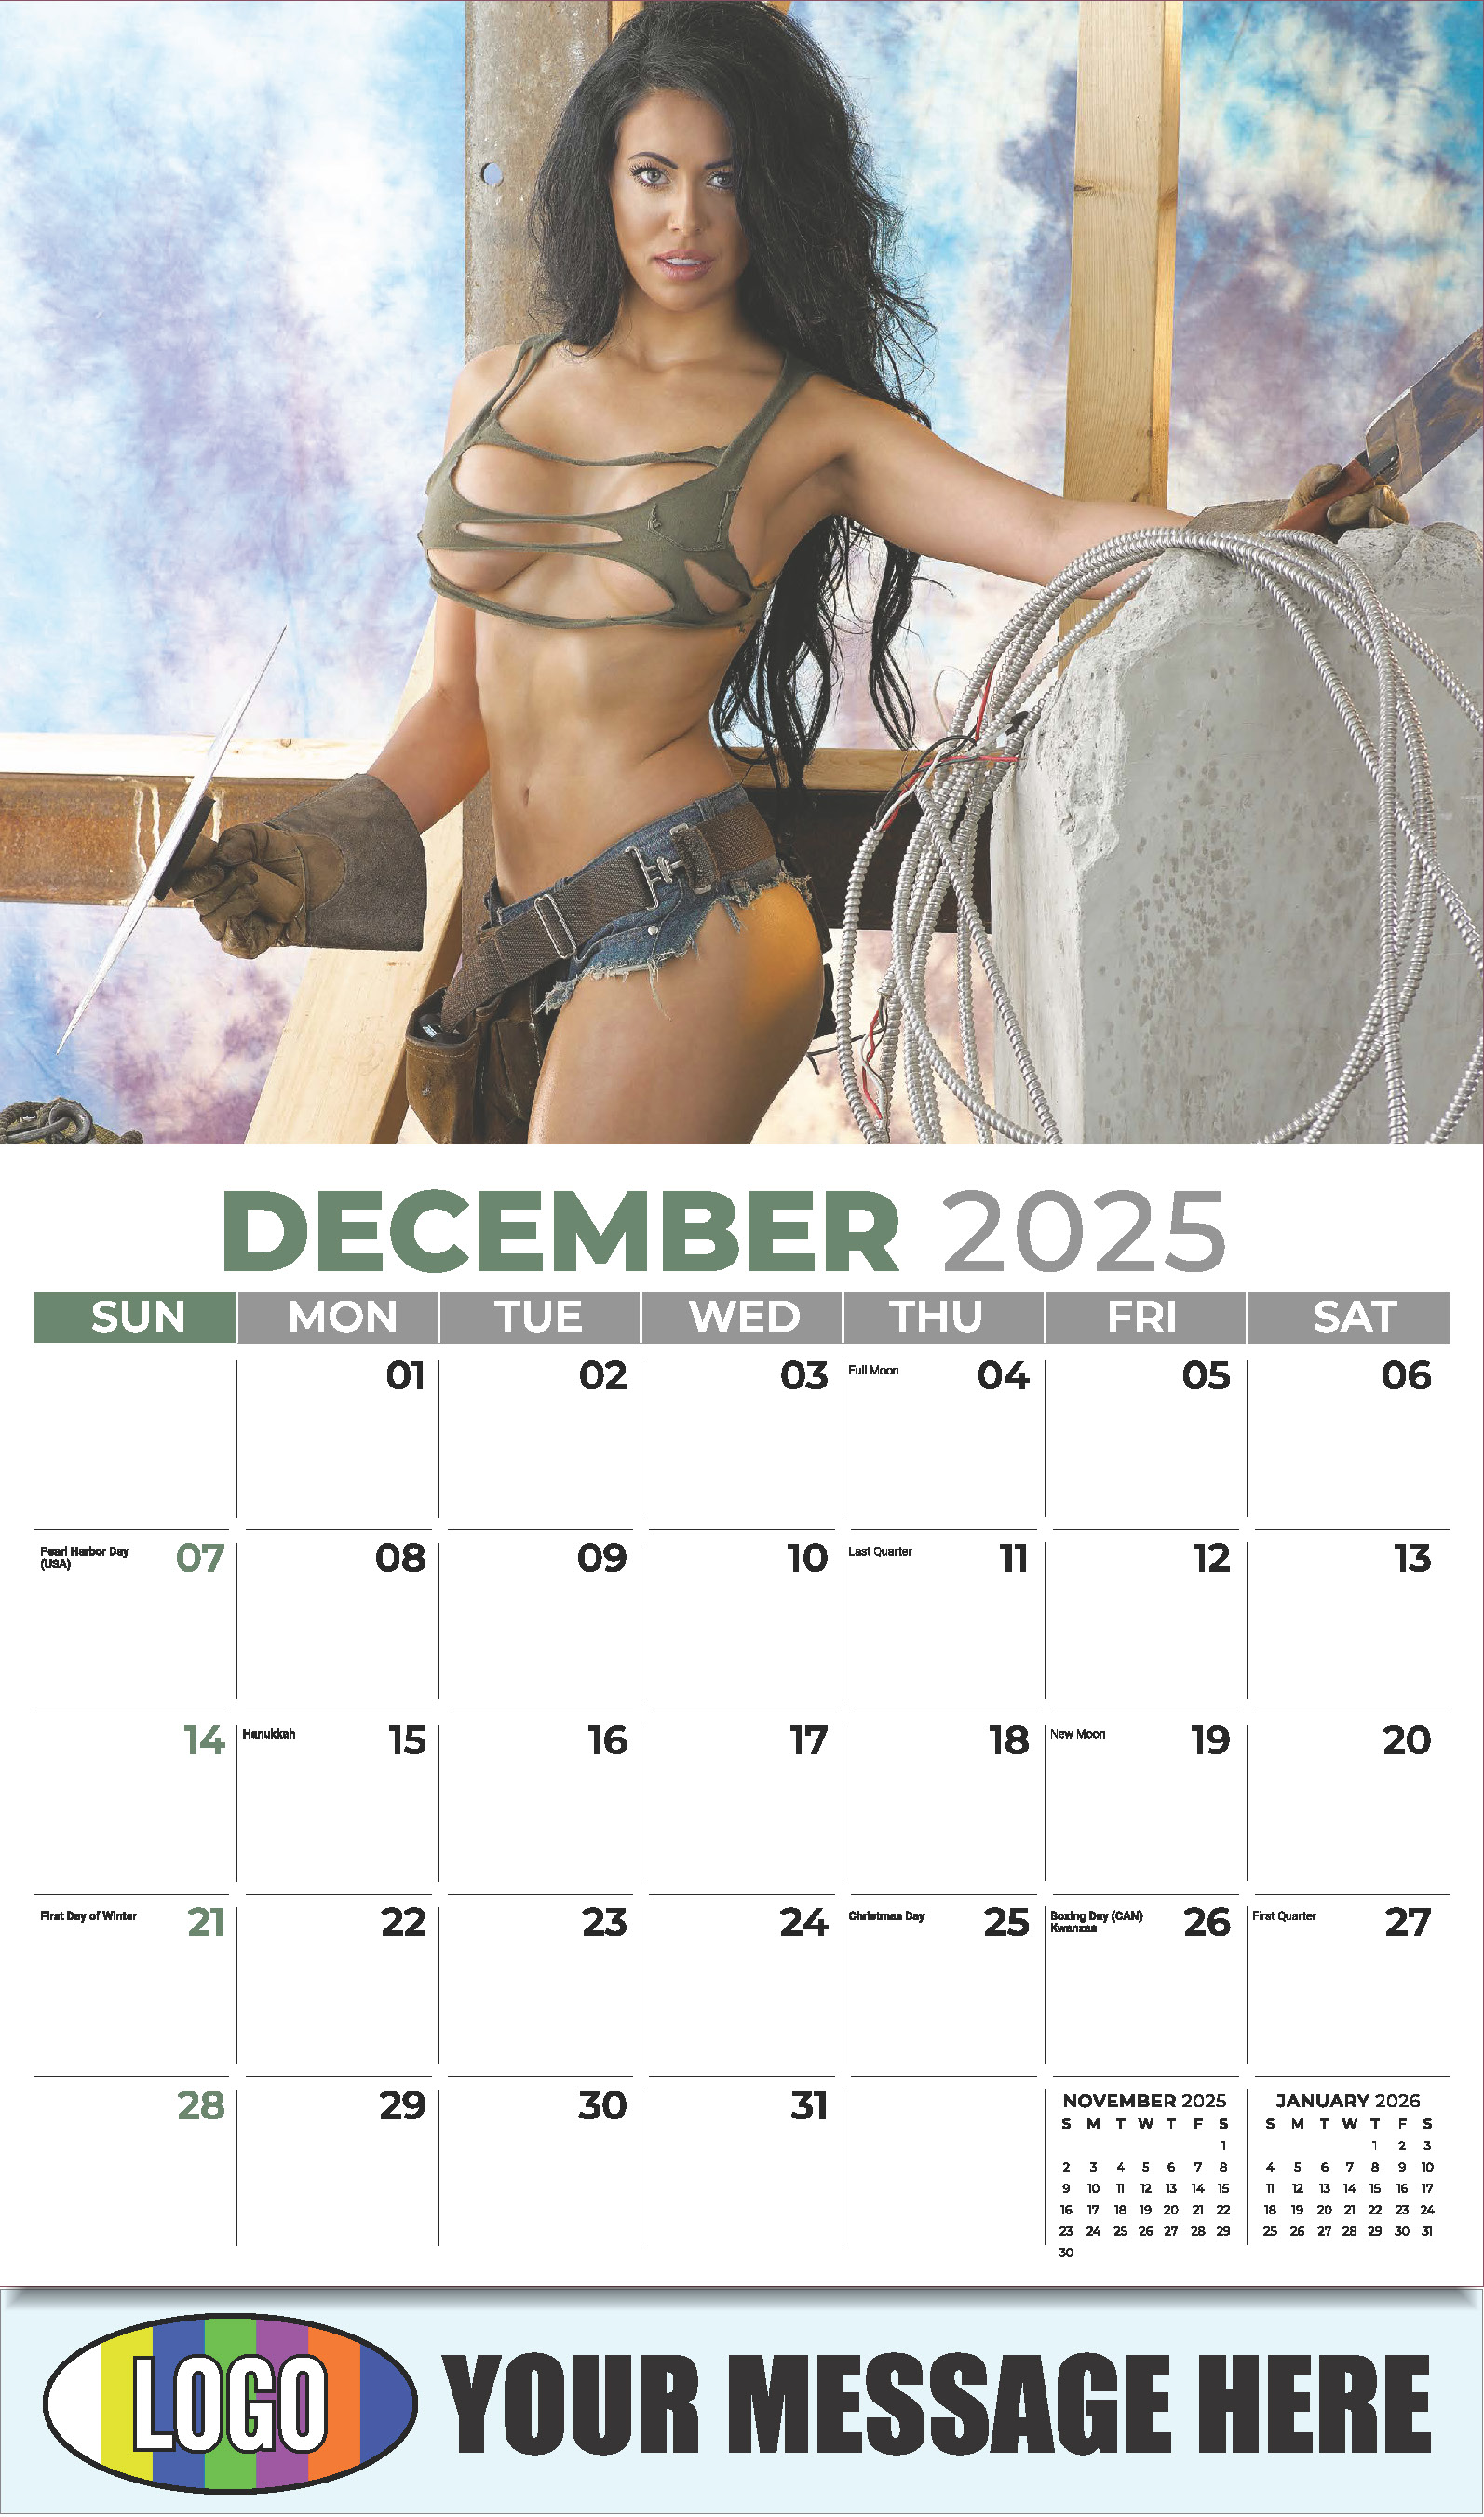 Building Bades 2025 Business Promotional Calendar - December